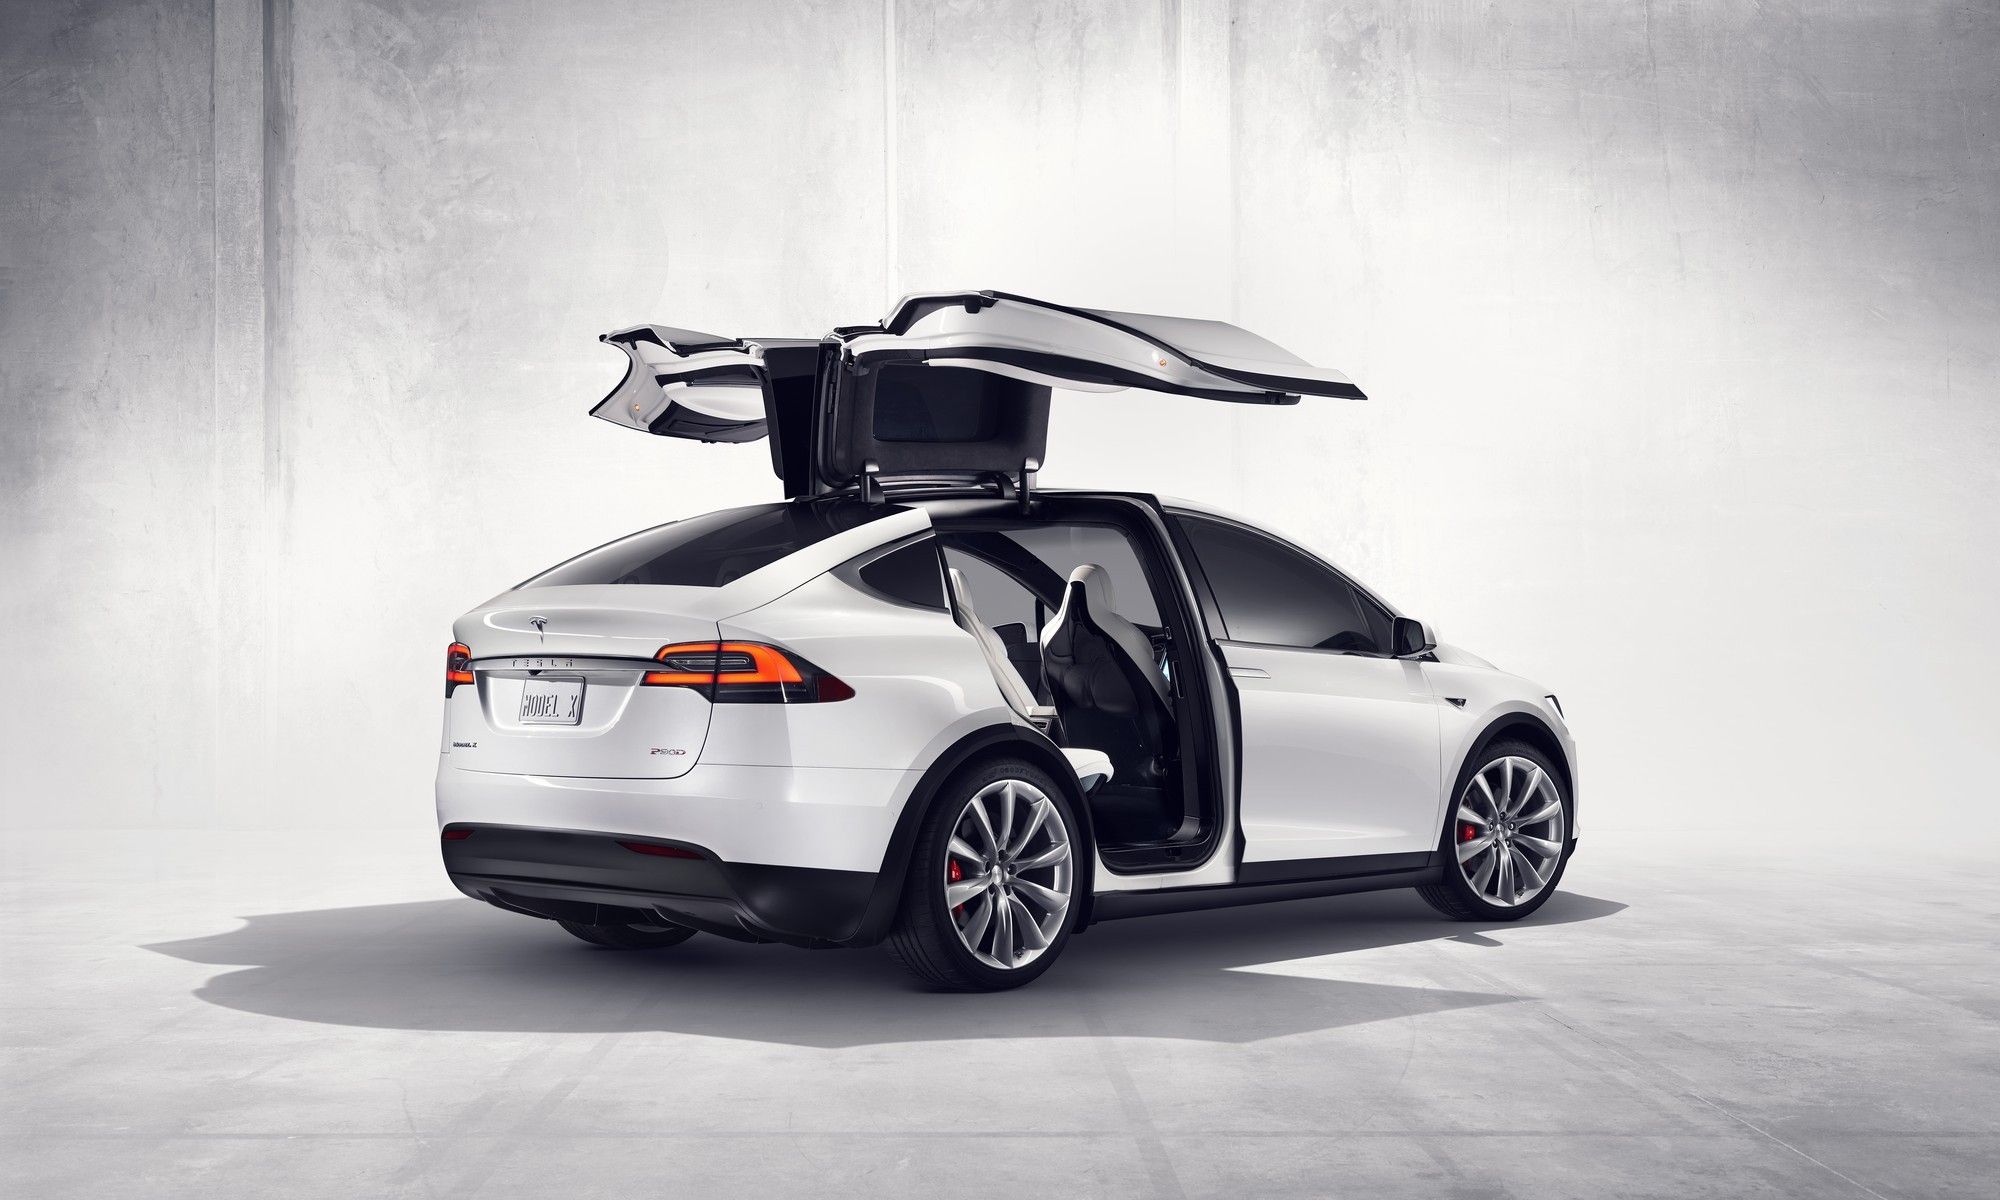 Photo of a Tesla Model X